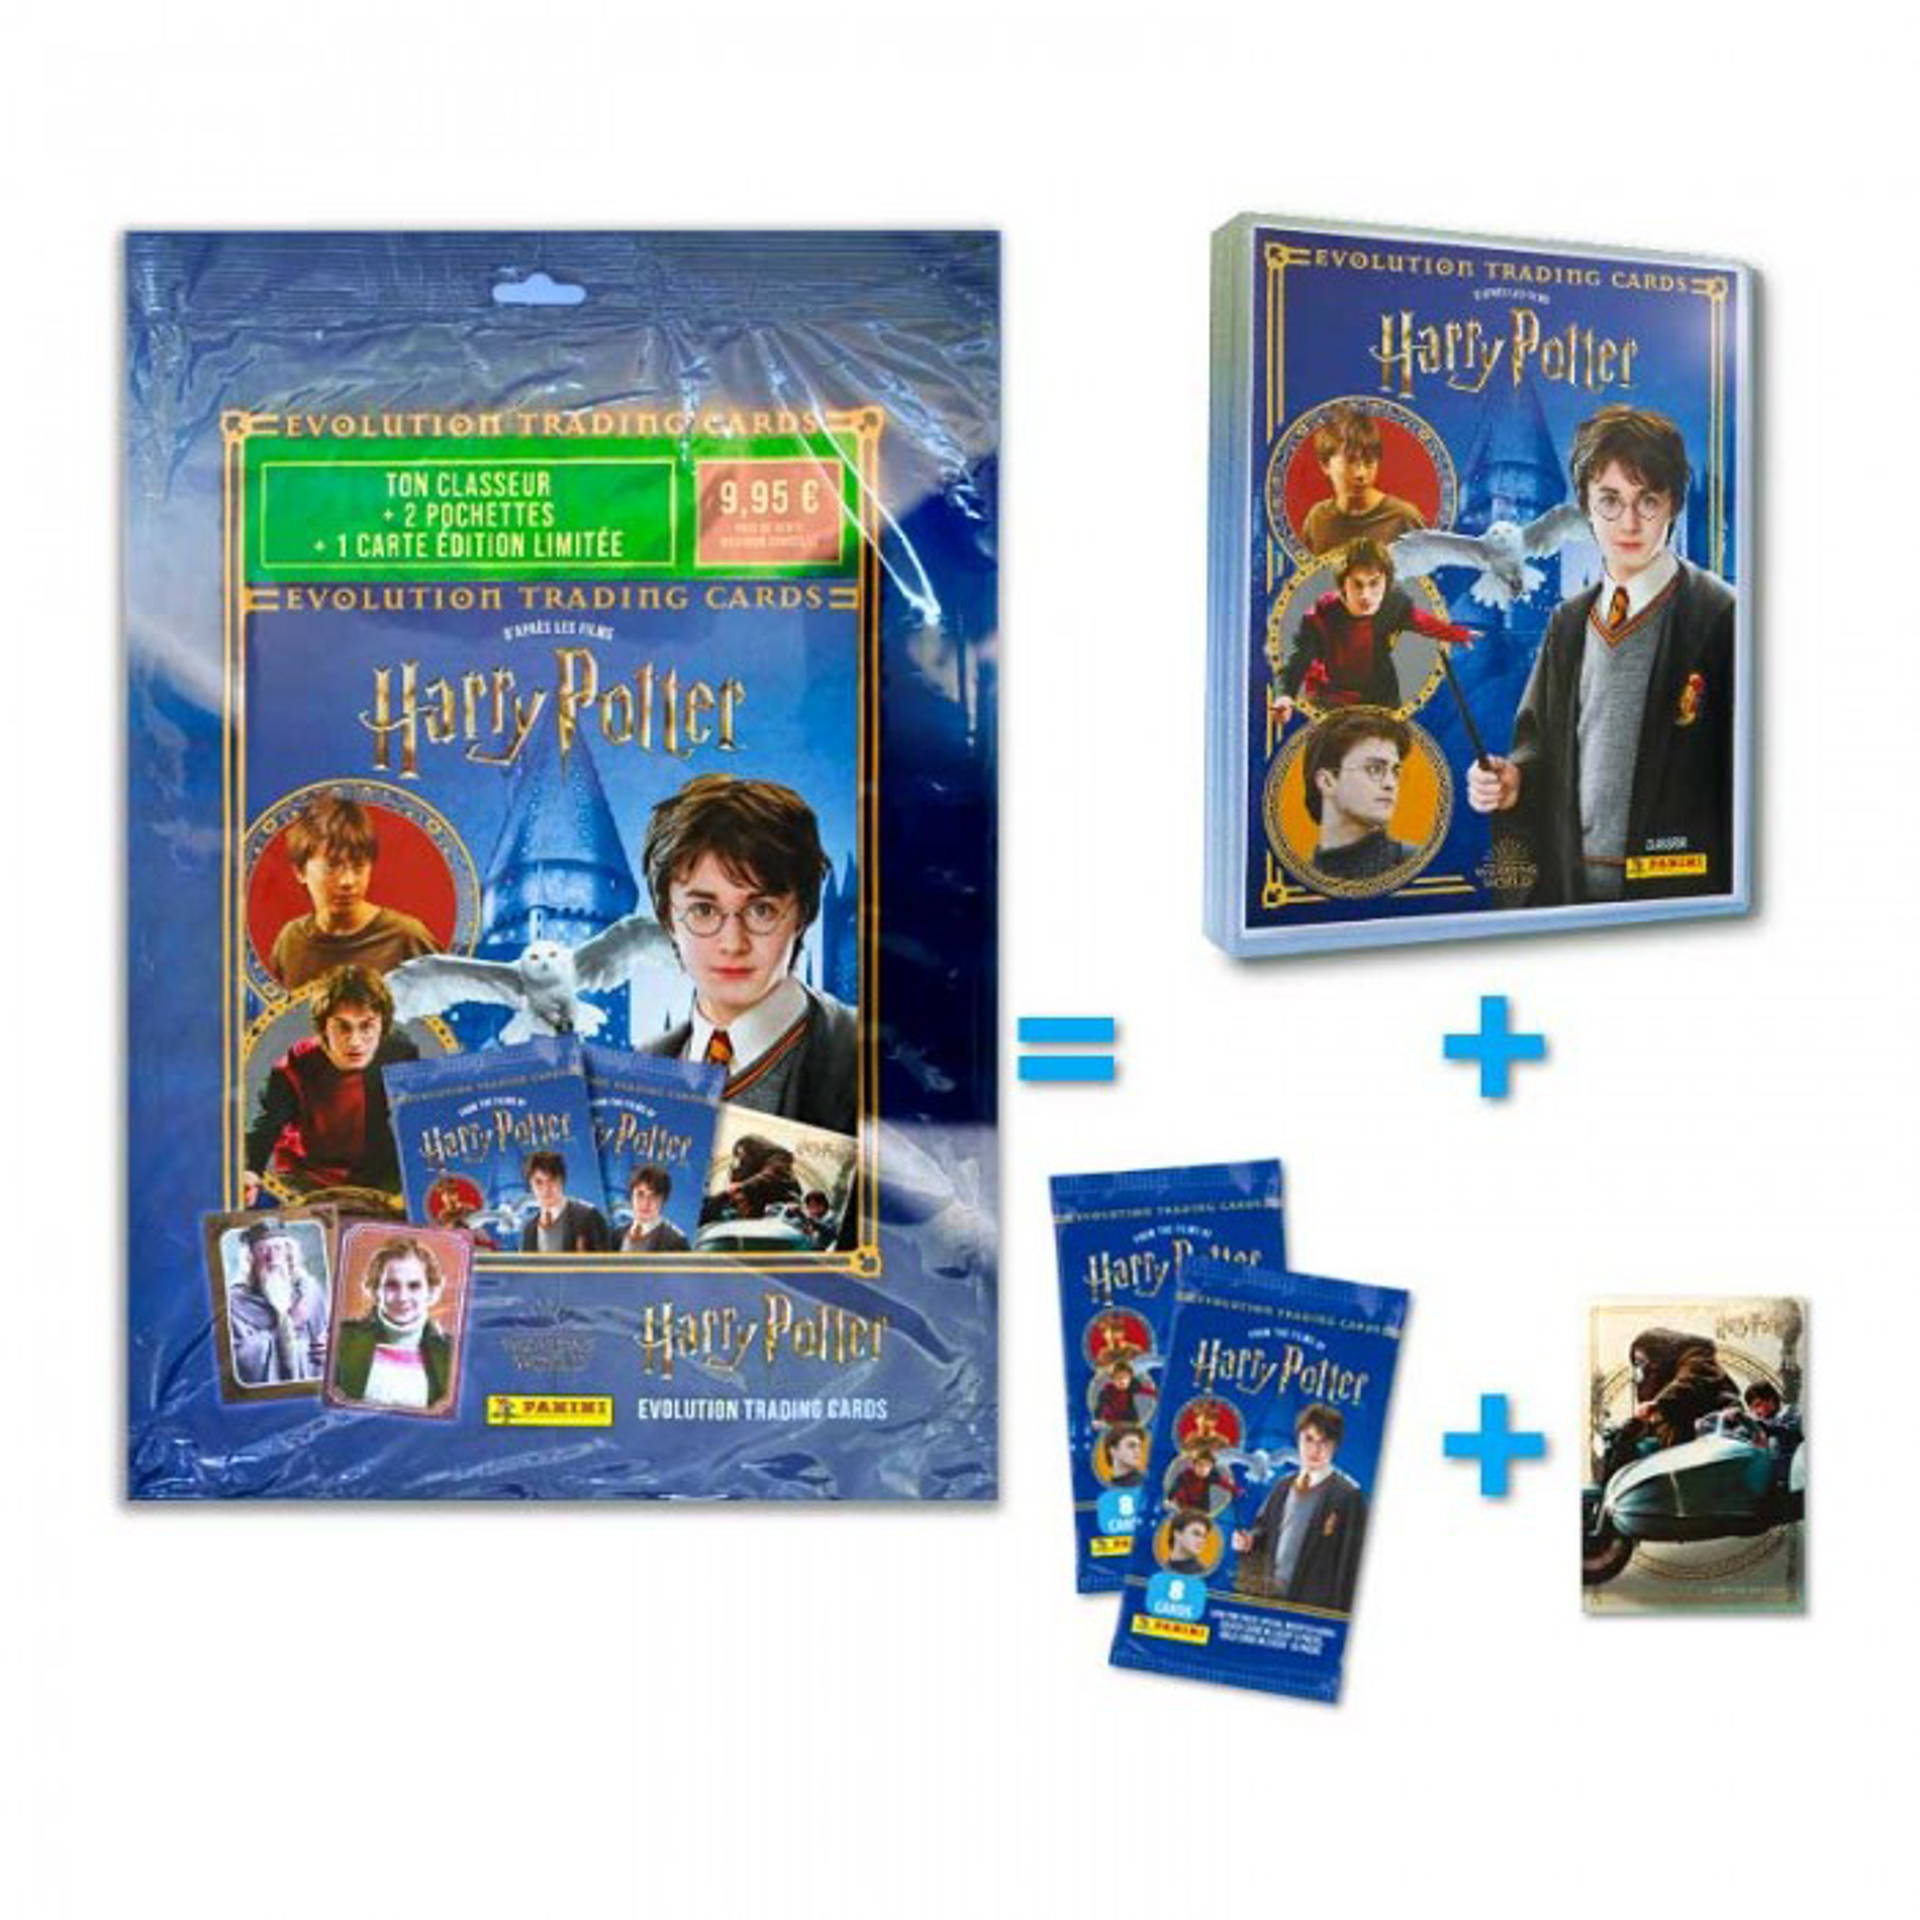 Acheter Panini - Pack de démarrage Harry Potter Evolution Trading